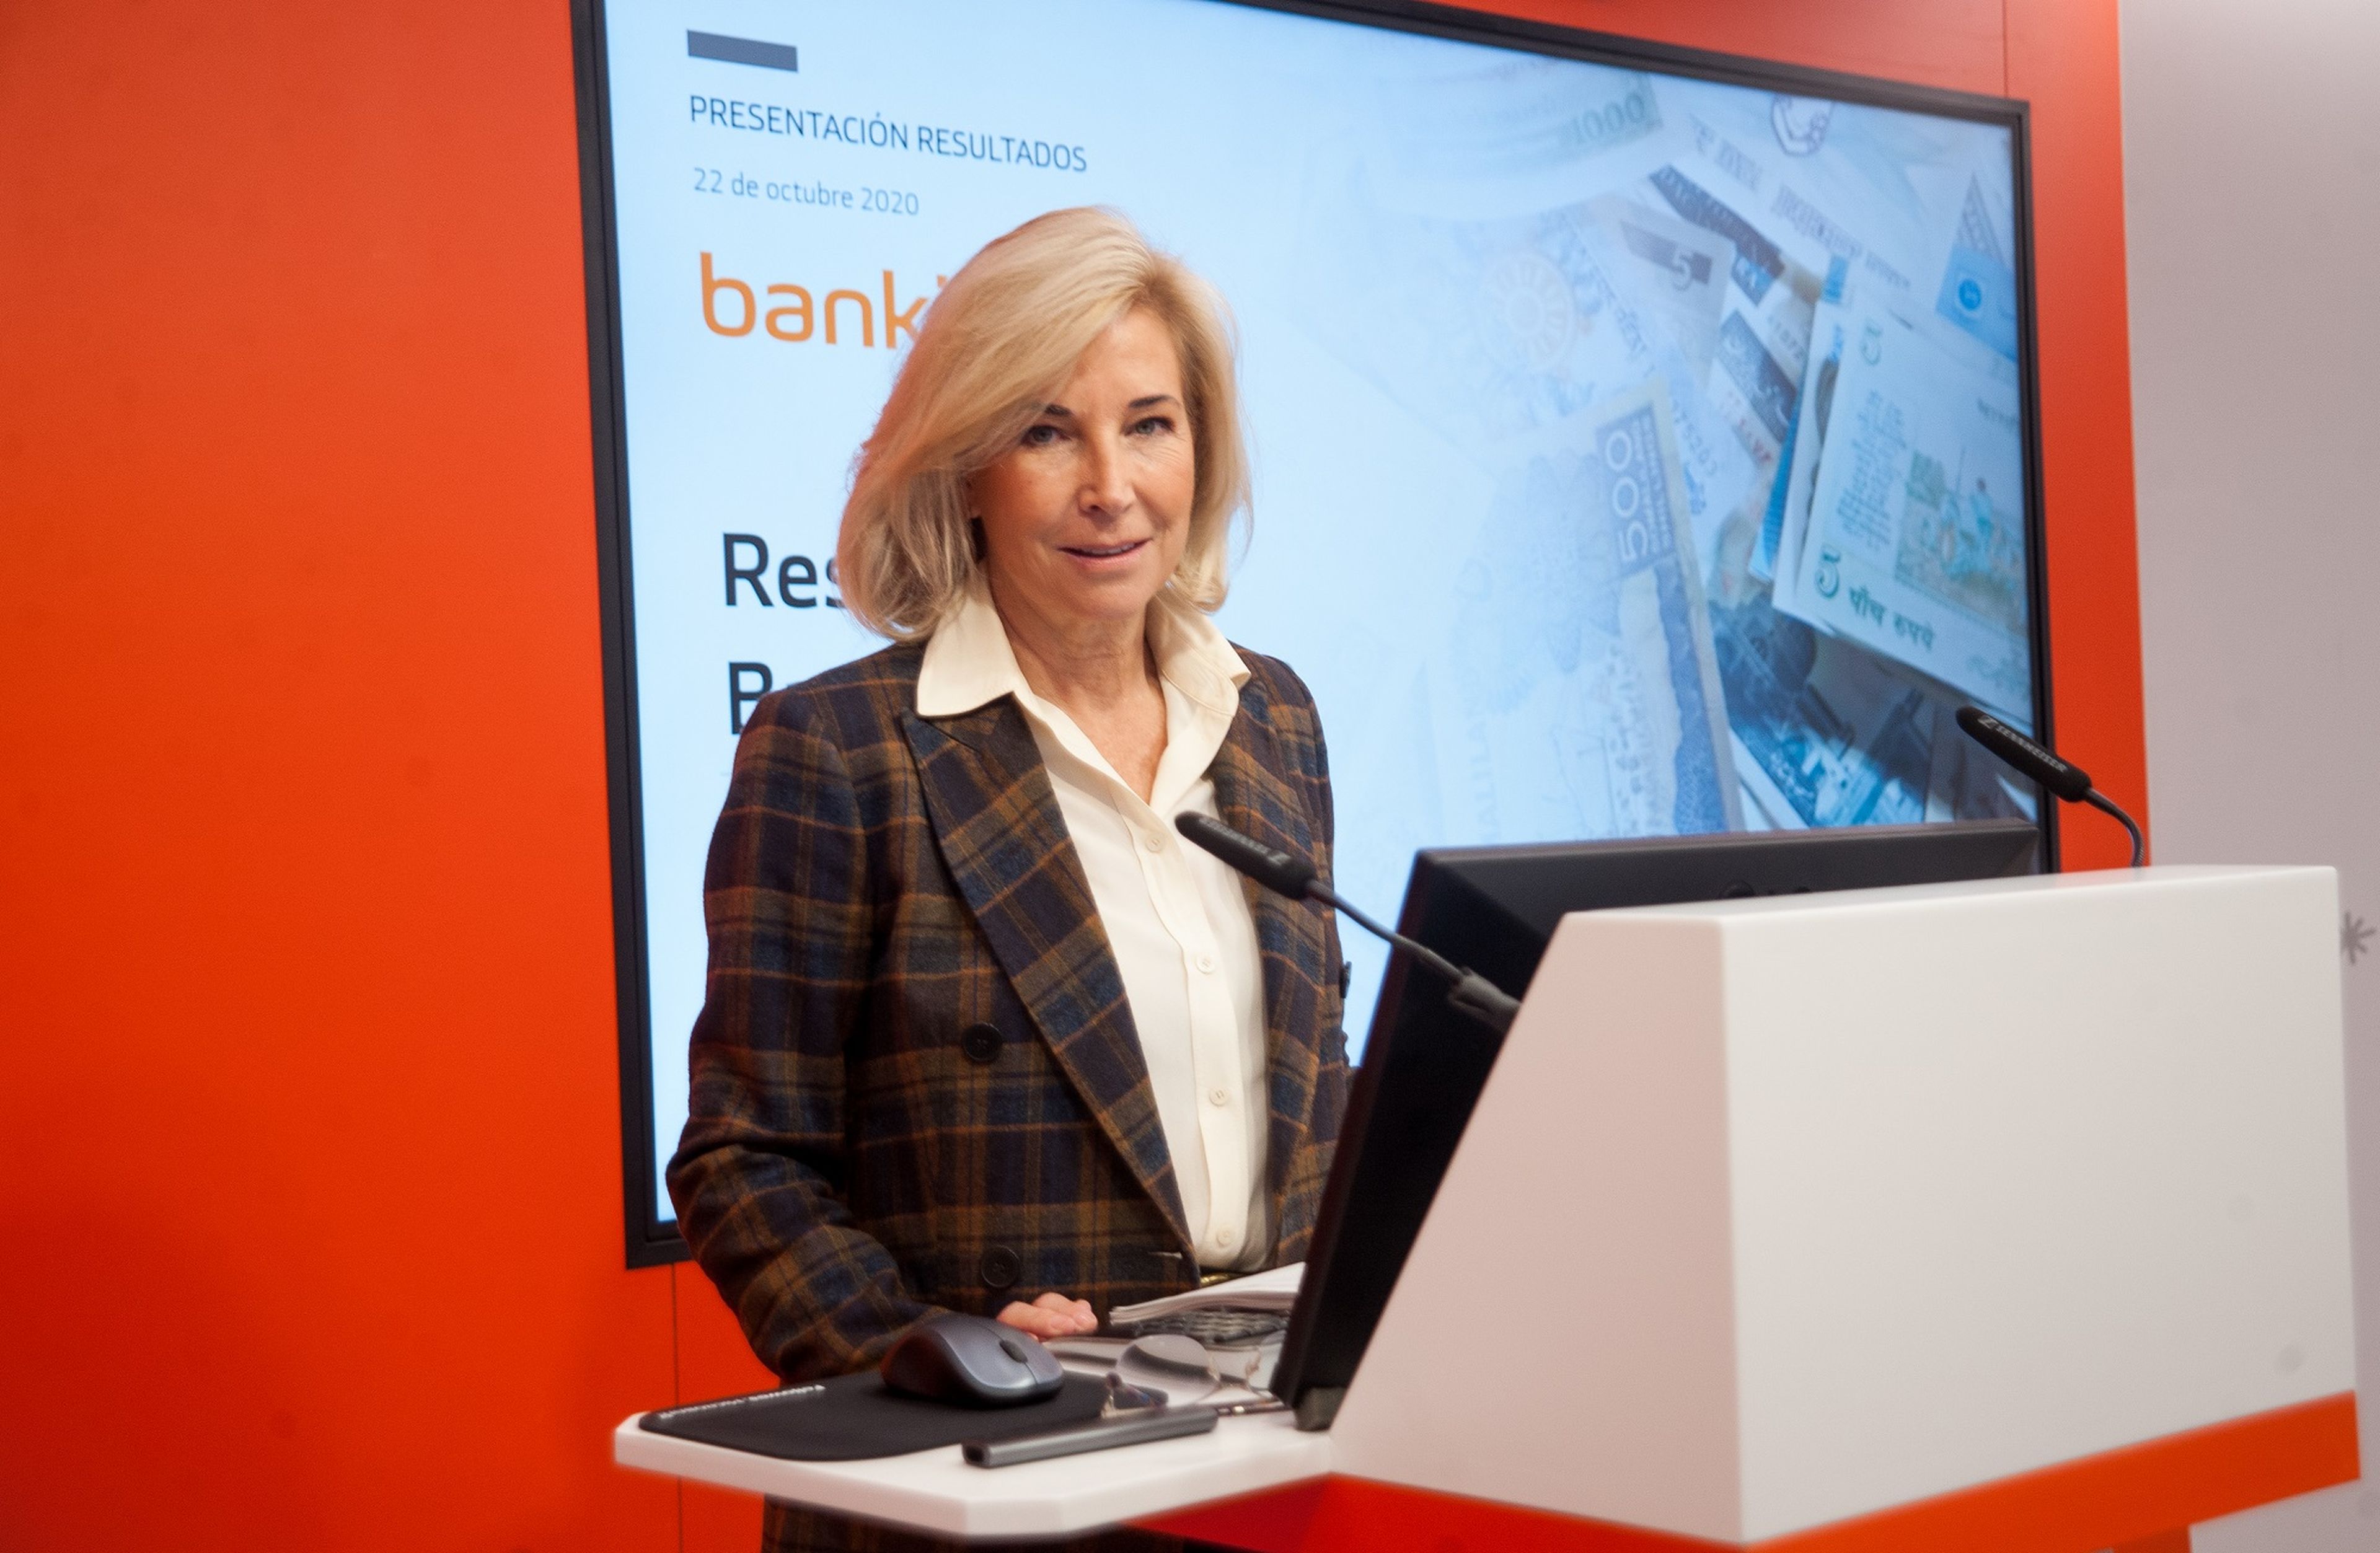 María Dolores Dancausa, CEO de Bankinter.